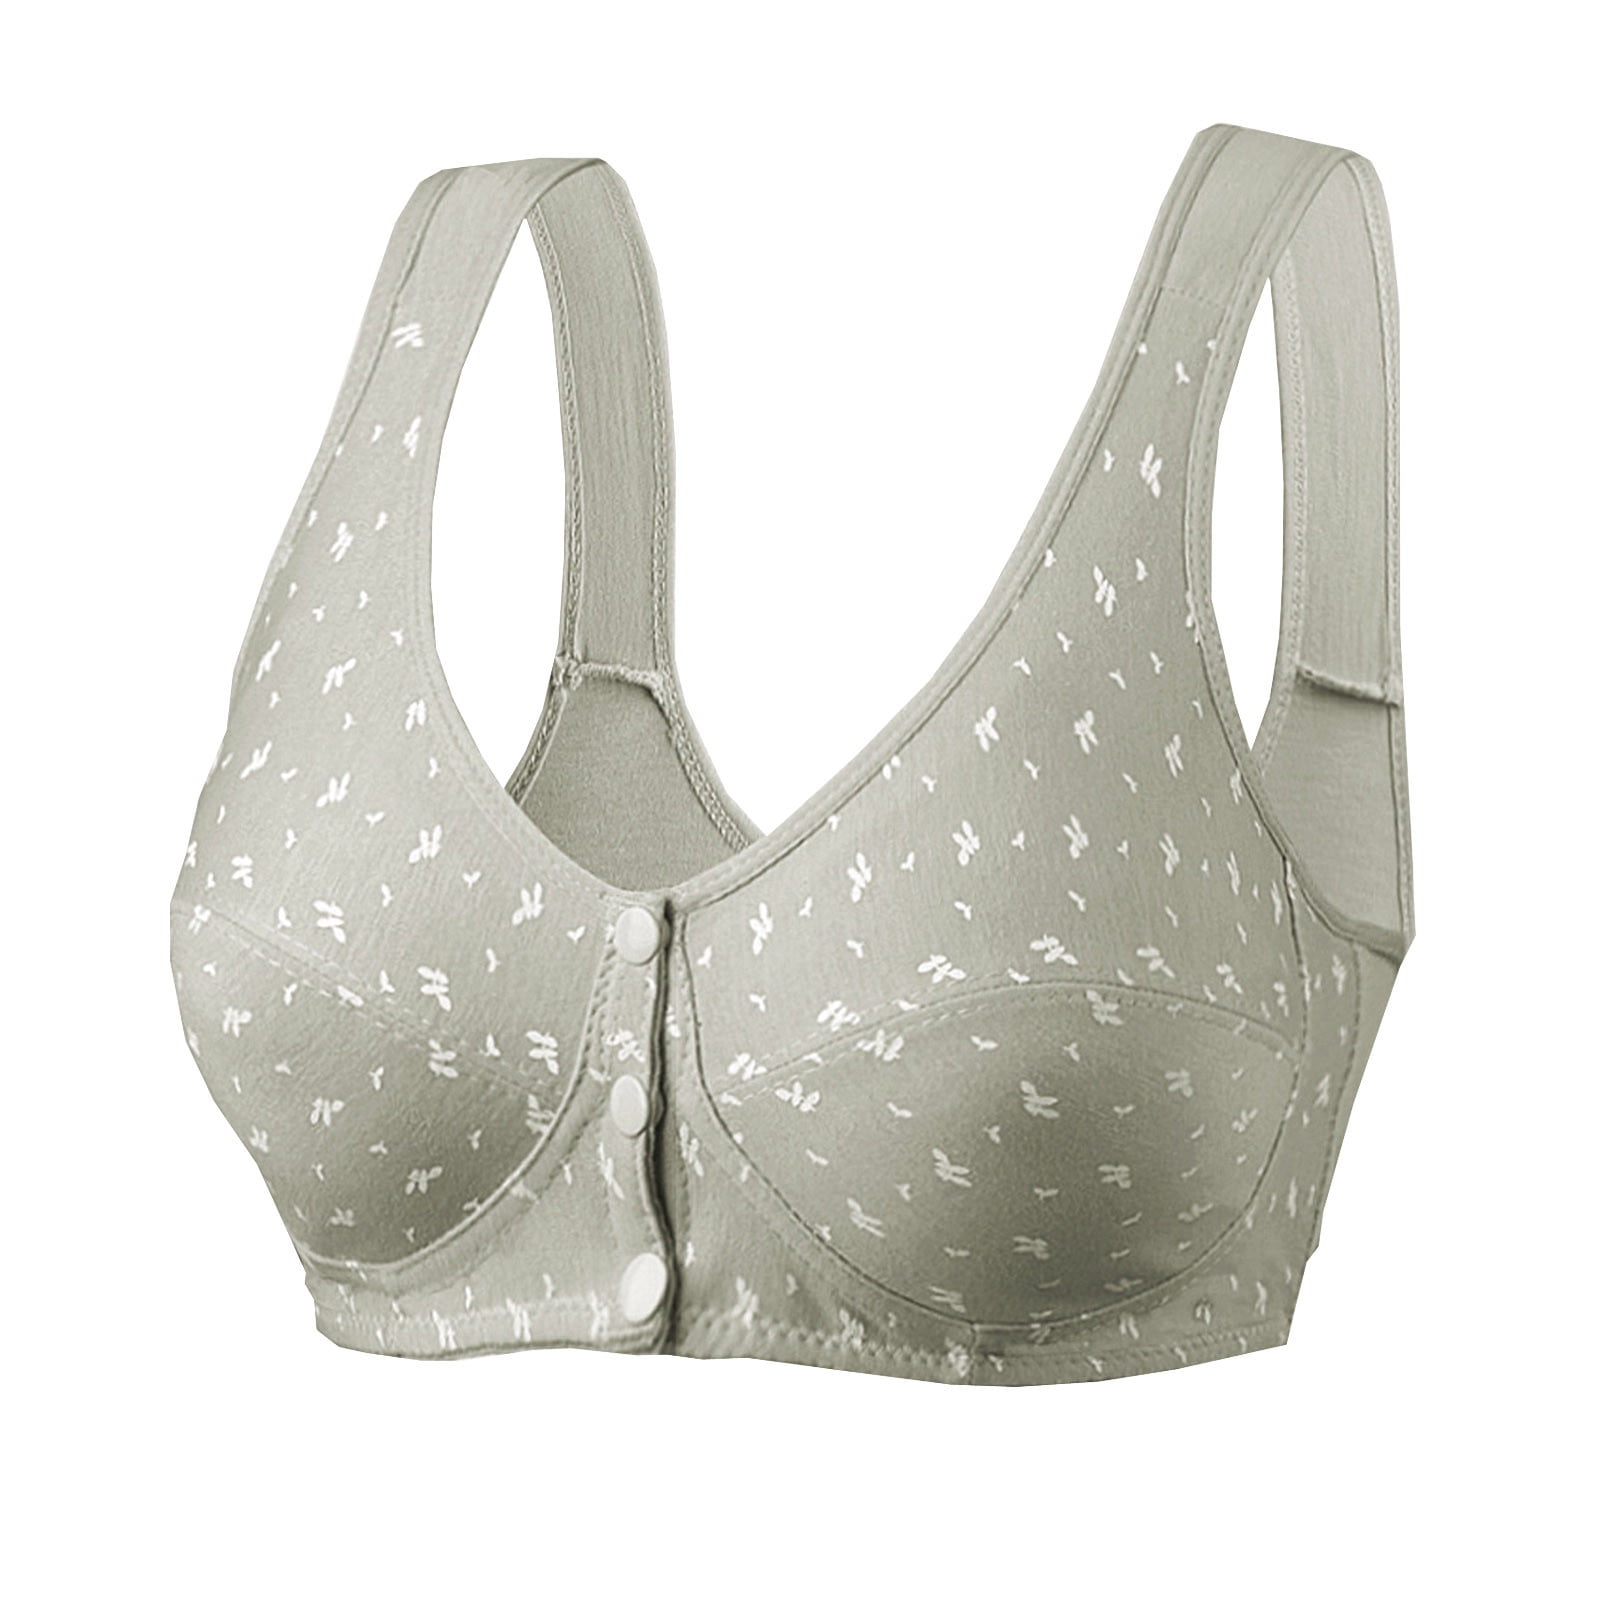 SOOMLON Women's Bras Plus Size Full Cup No Underwire Cotton Breathable Bra Daily Bras Sleep Bras ...